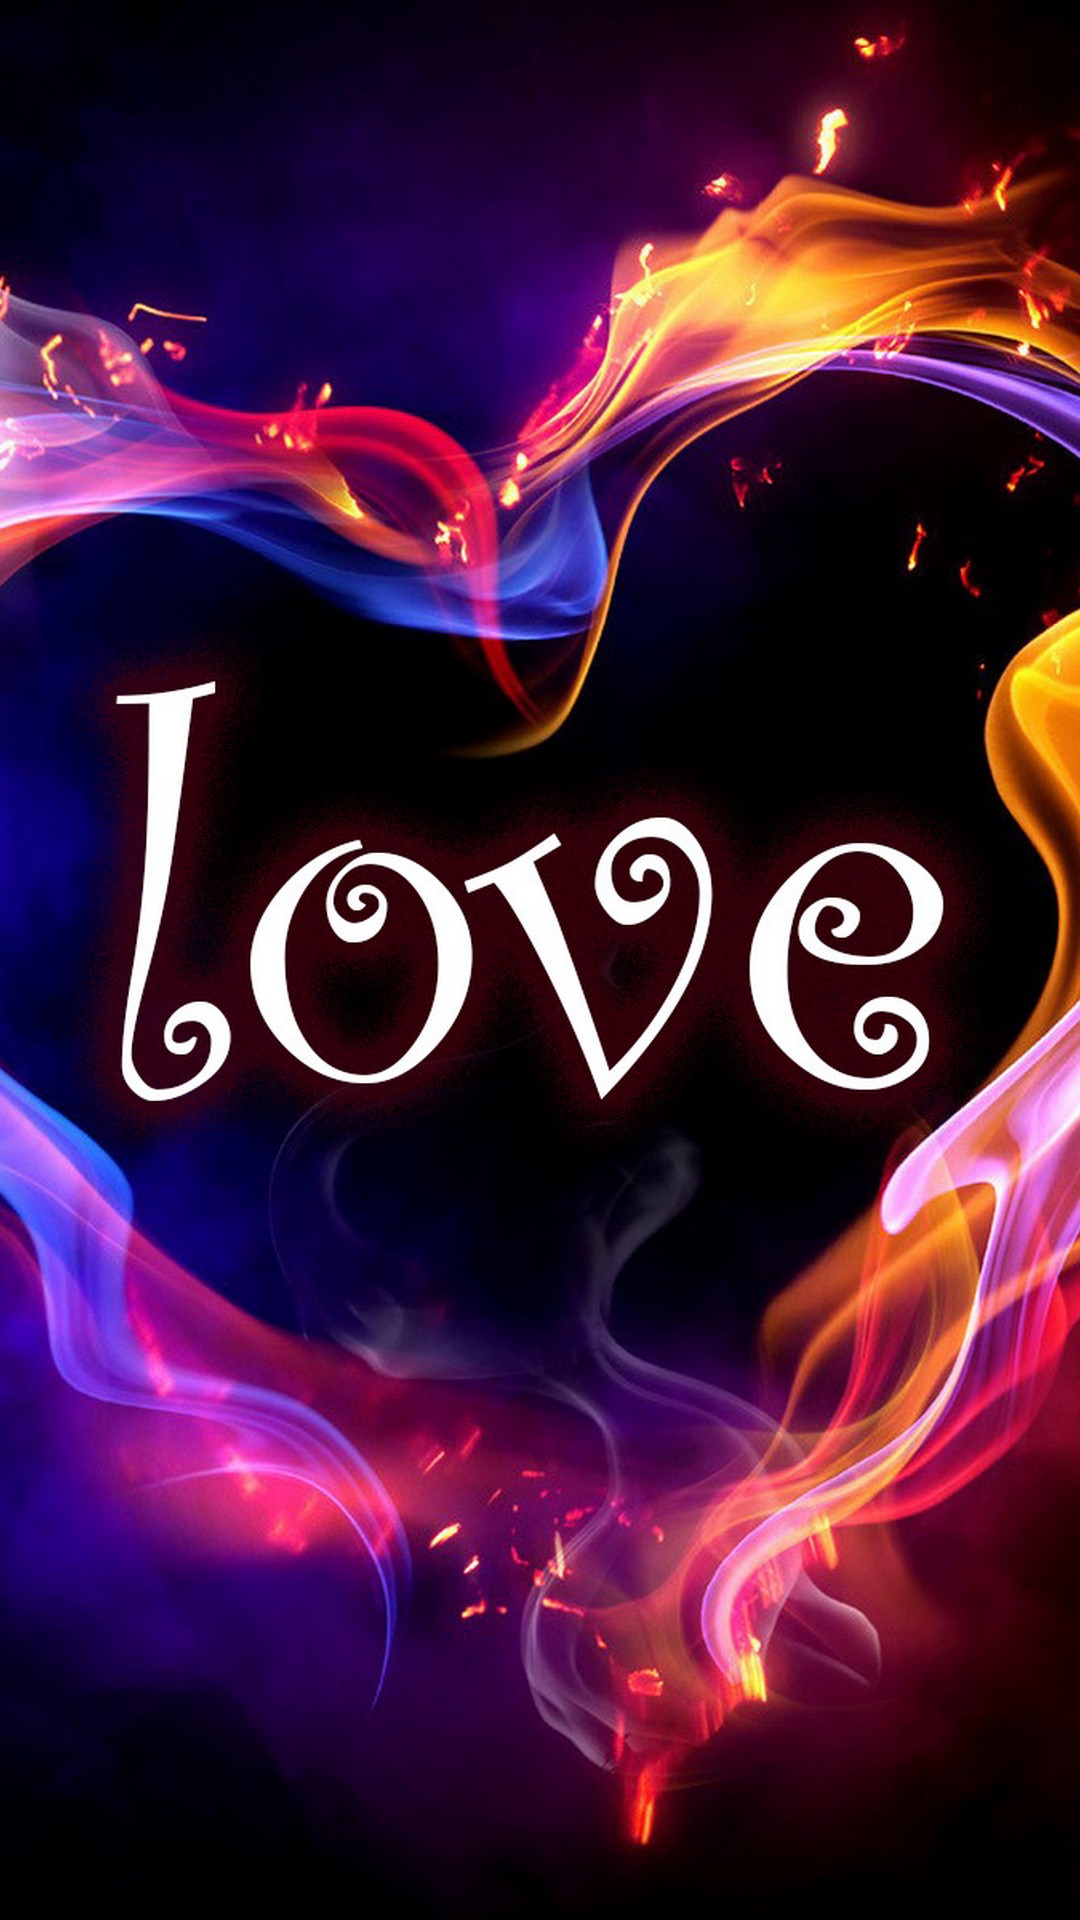 2000 Free Love Wallpaper Images  Photos  Pixabay